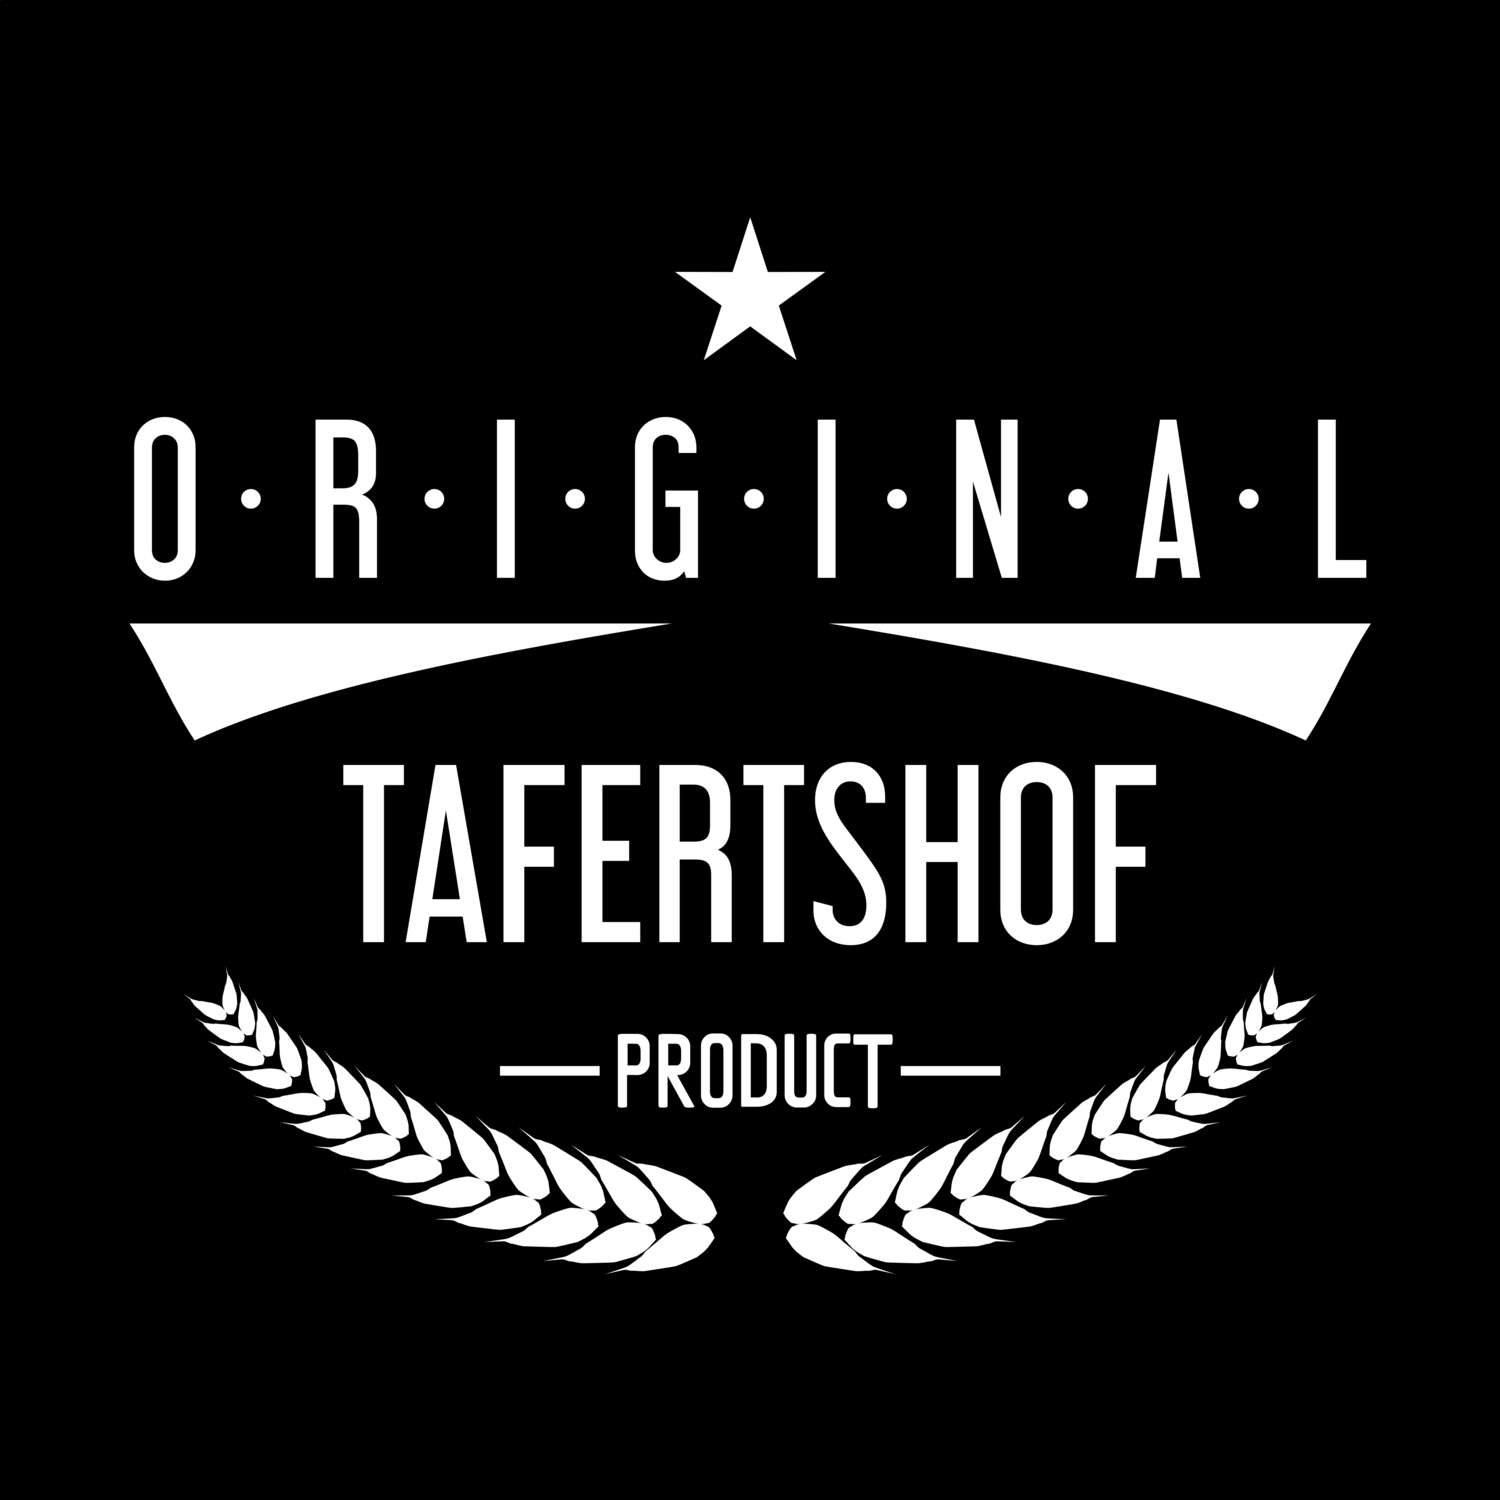 Tafertshof T-Shirt »Original Product«